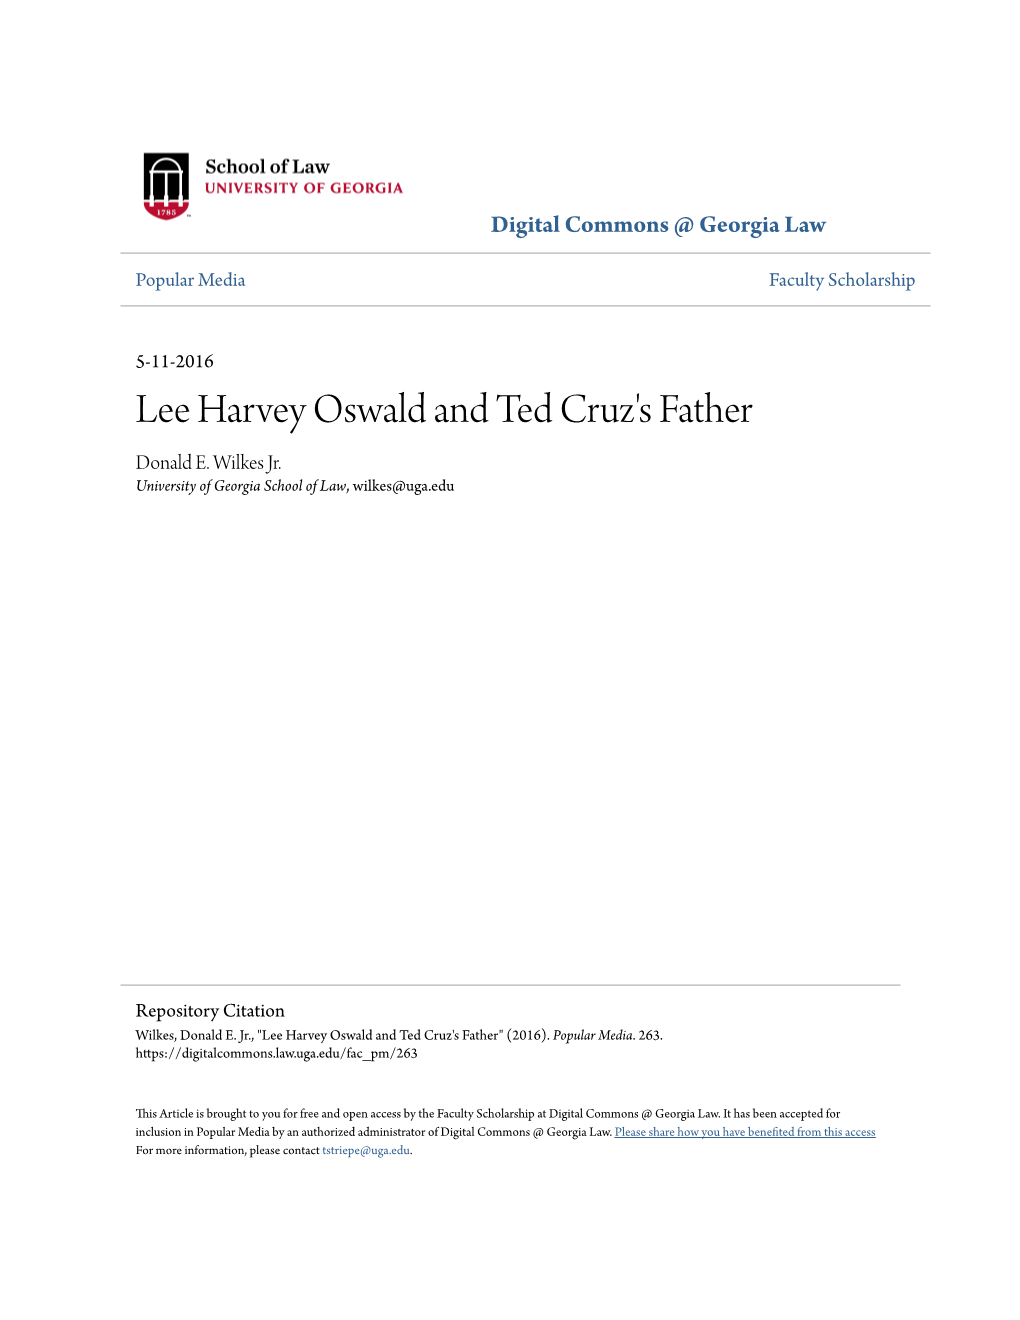 Lee Harvey Oswald and Ted Cruz's Father Donald E